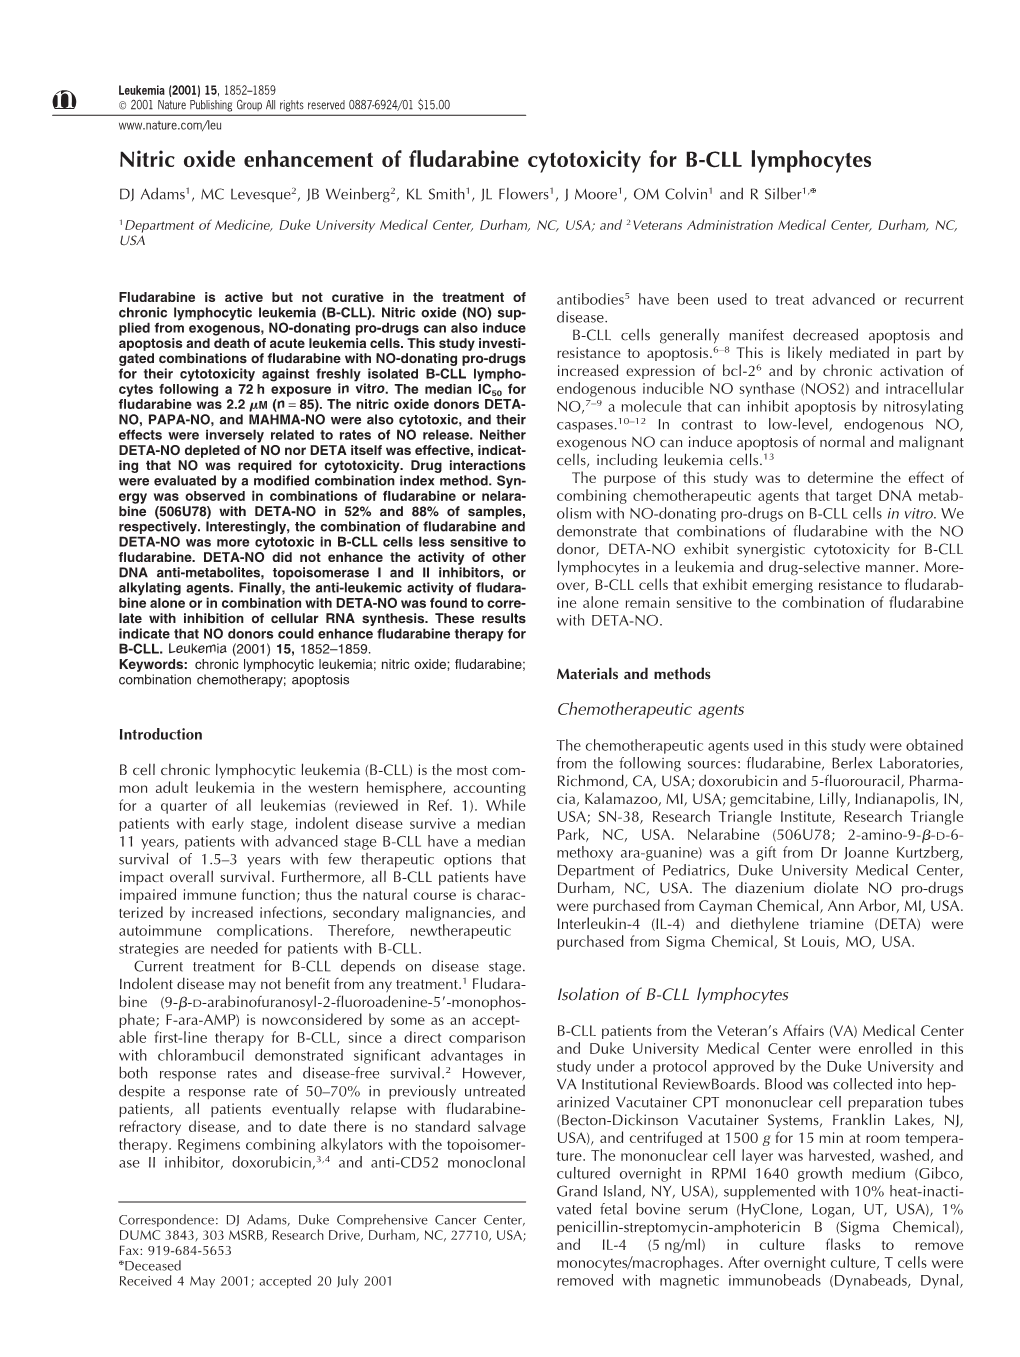 Nitric Oxide Enhancement of Fludarabine Cytotoxicity for B-CLL Lymphocytes